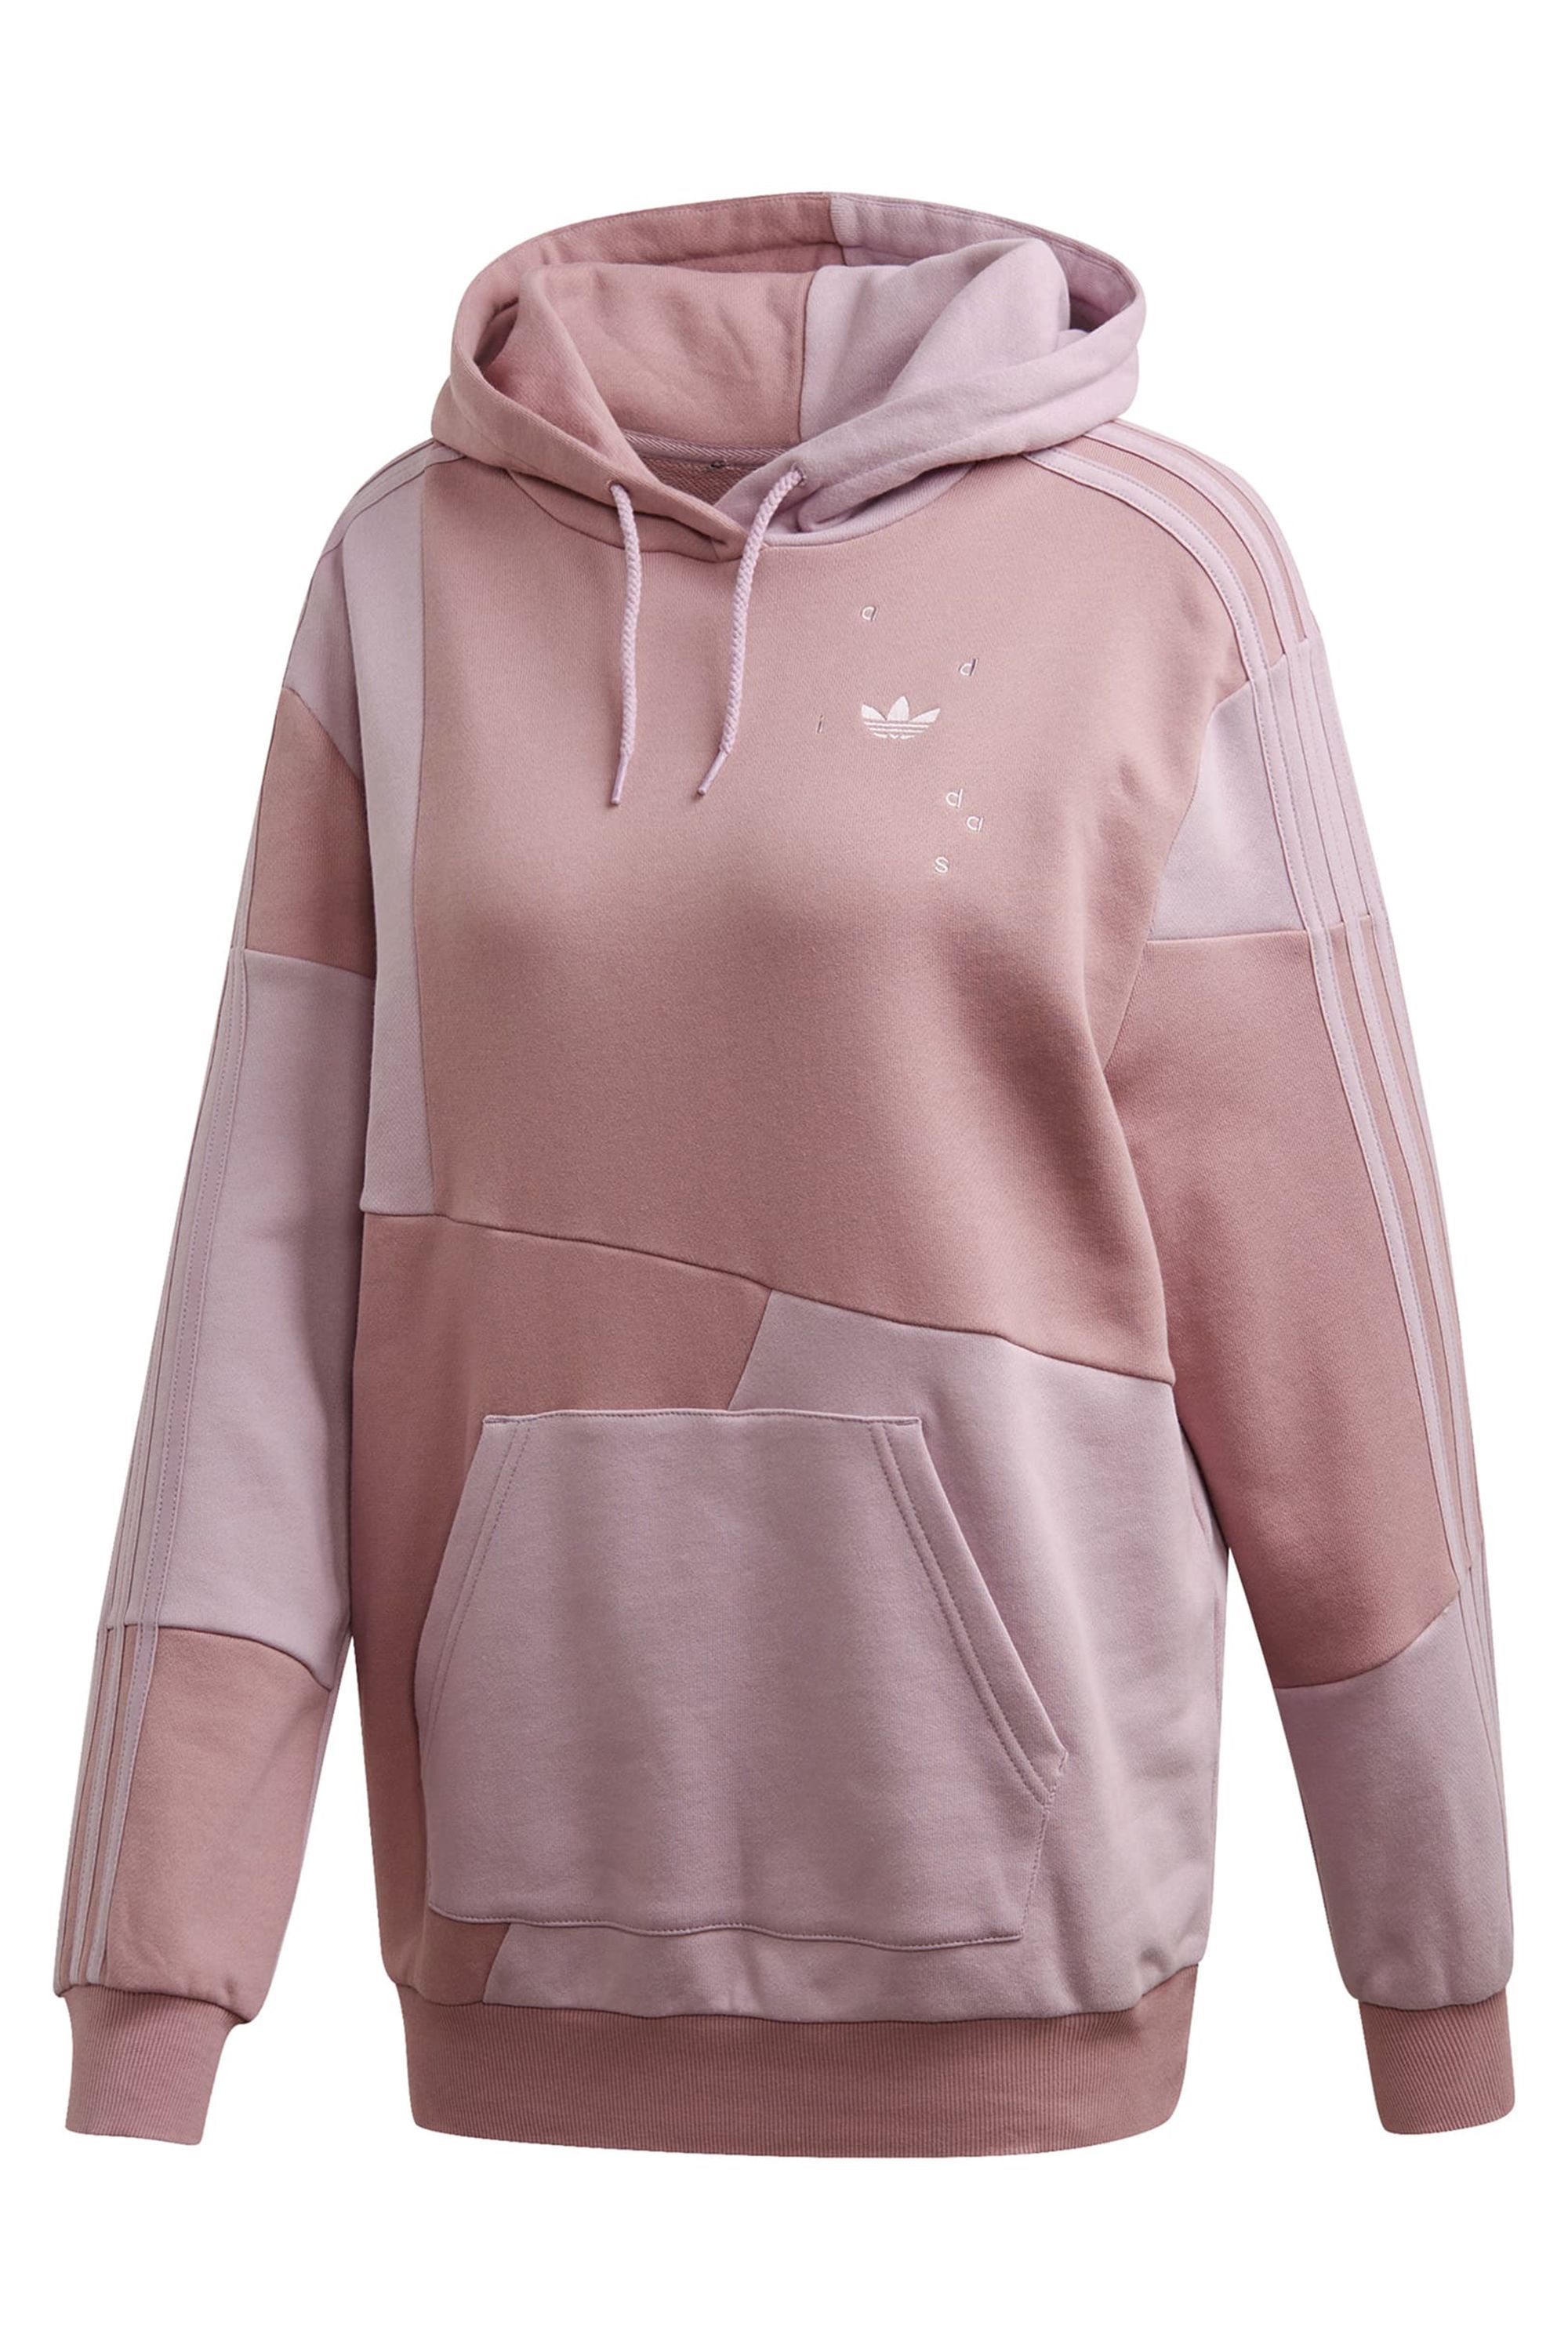 cheap branded hoodies womens